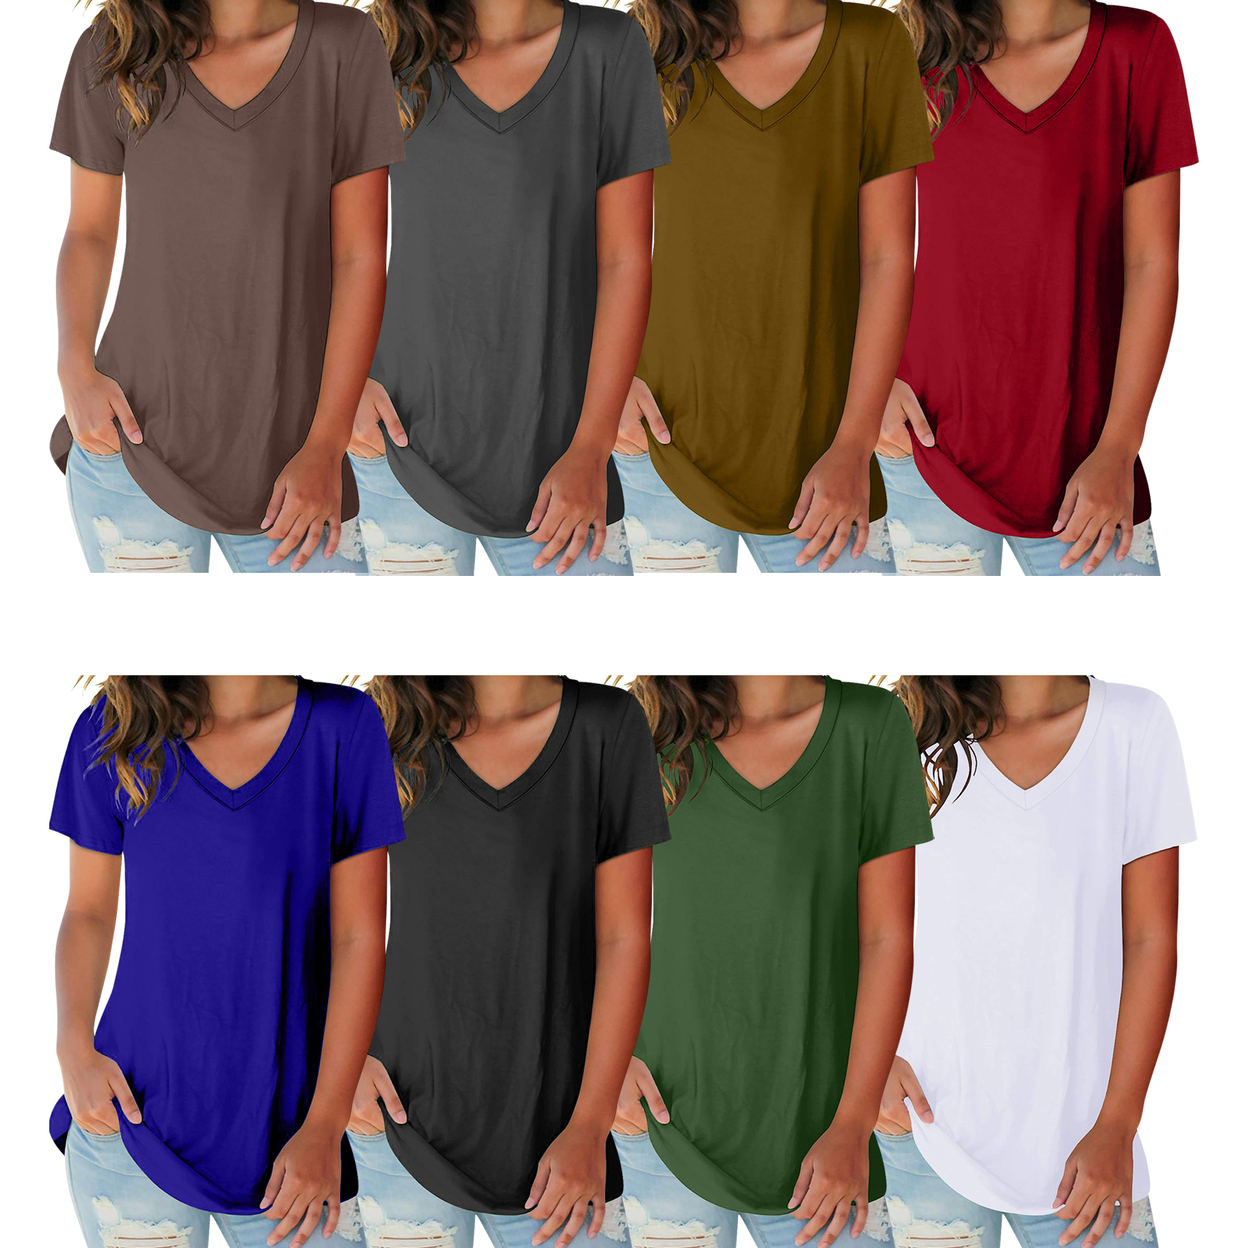 2-Pack: Women's Ultra Soft Smooth Cotton Blend Basic V-Neck Short Sleeve Shirts - Black & Red, Large